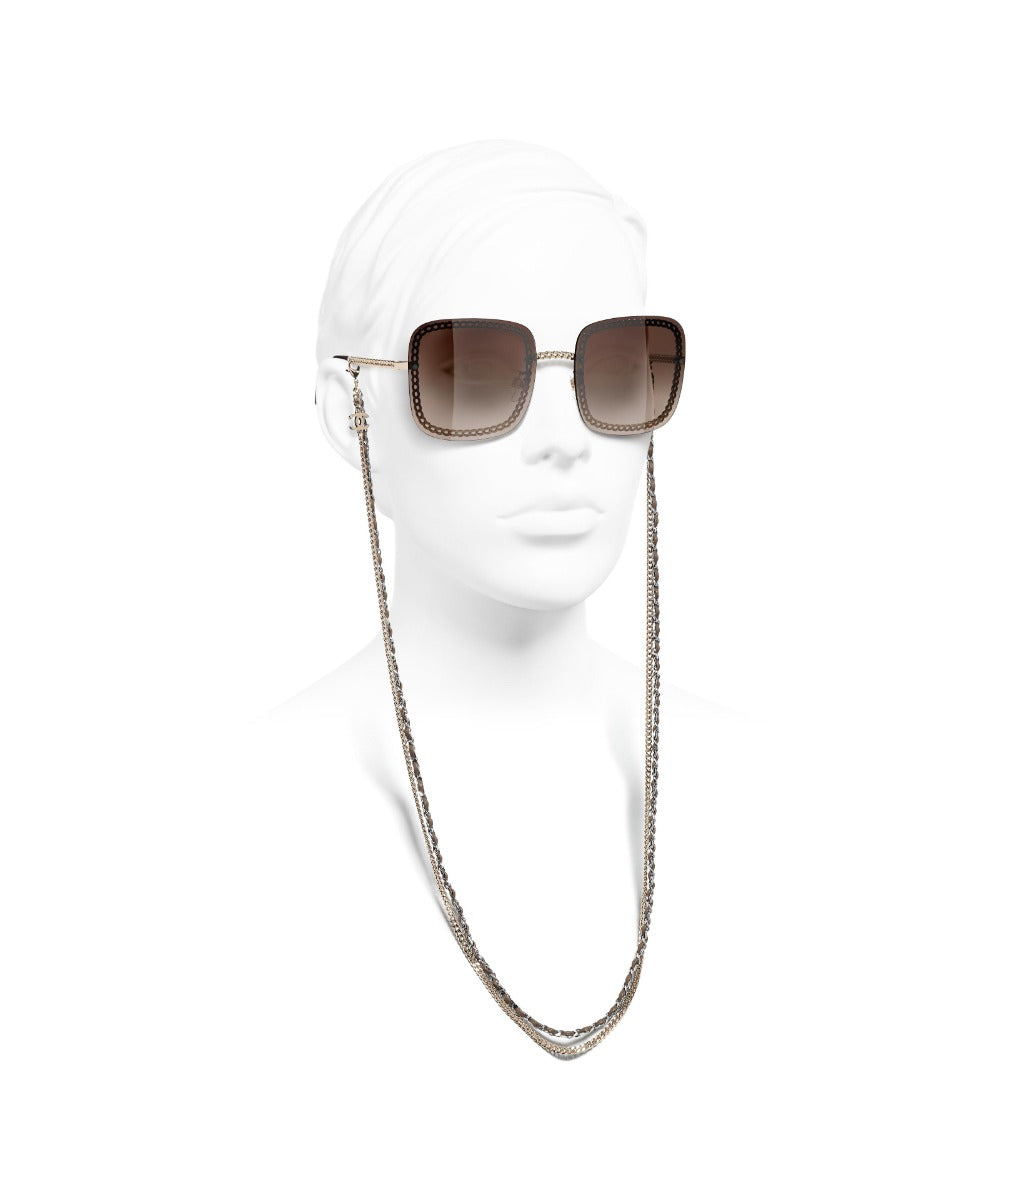 CHANEL Square Removable Chain Sunglasses 4244 Blue 626655